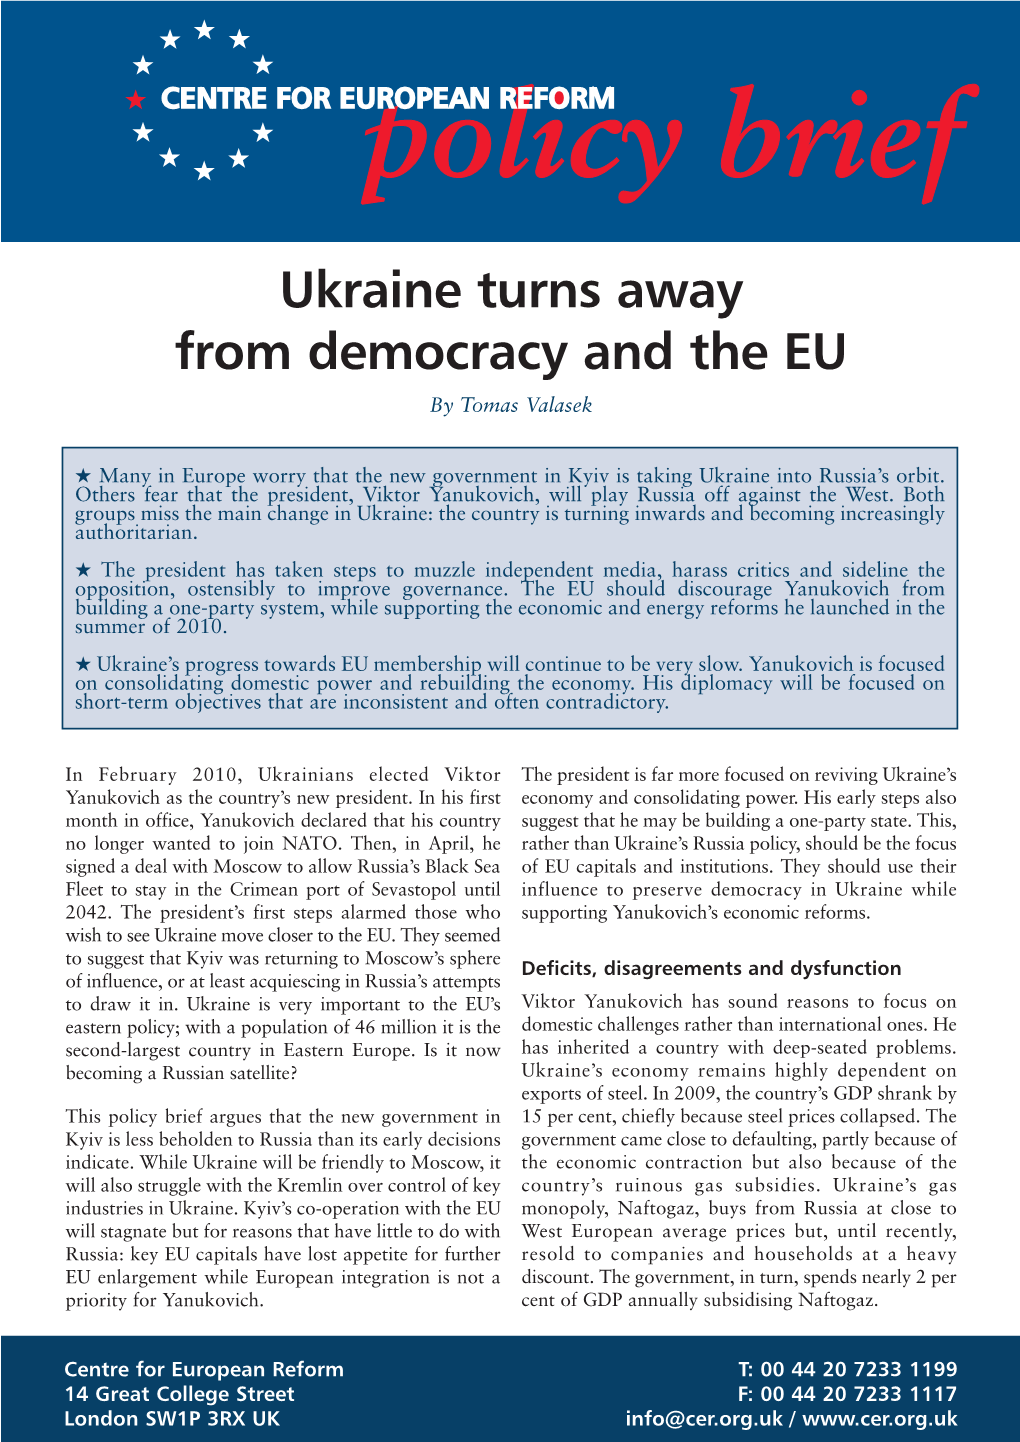 Ukraine Turns Away for Democracy and the EU